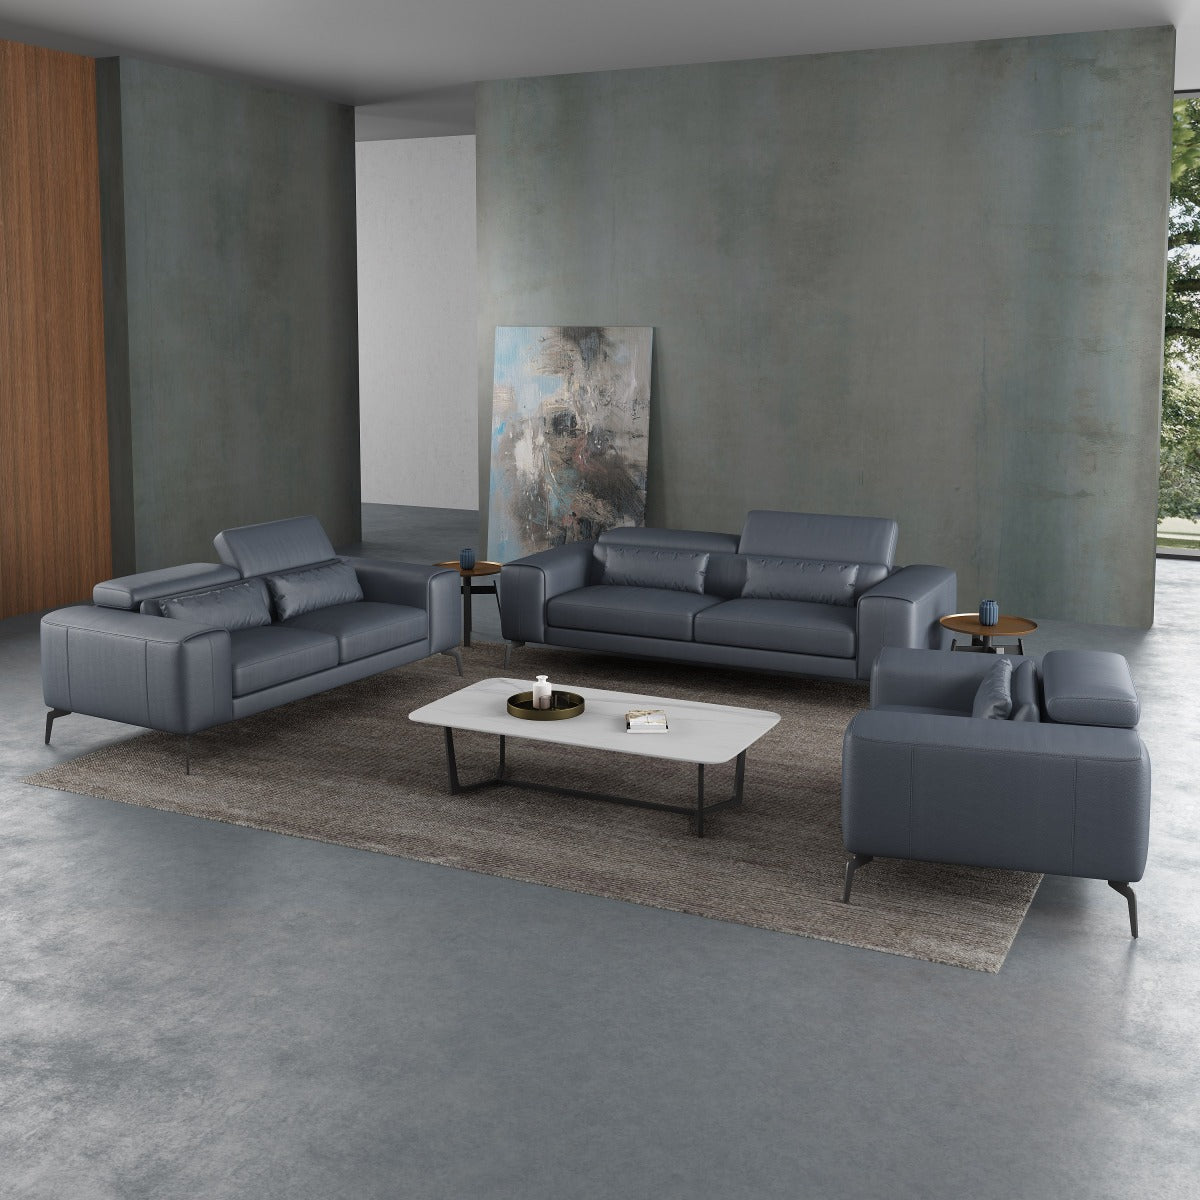 European Furniture - Cavour Sofa in Smokey Gray - 12550-S - New Star Living